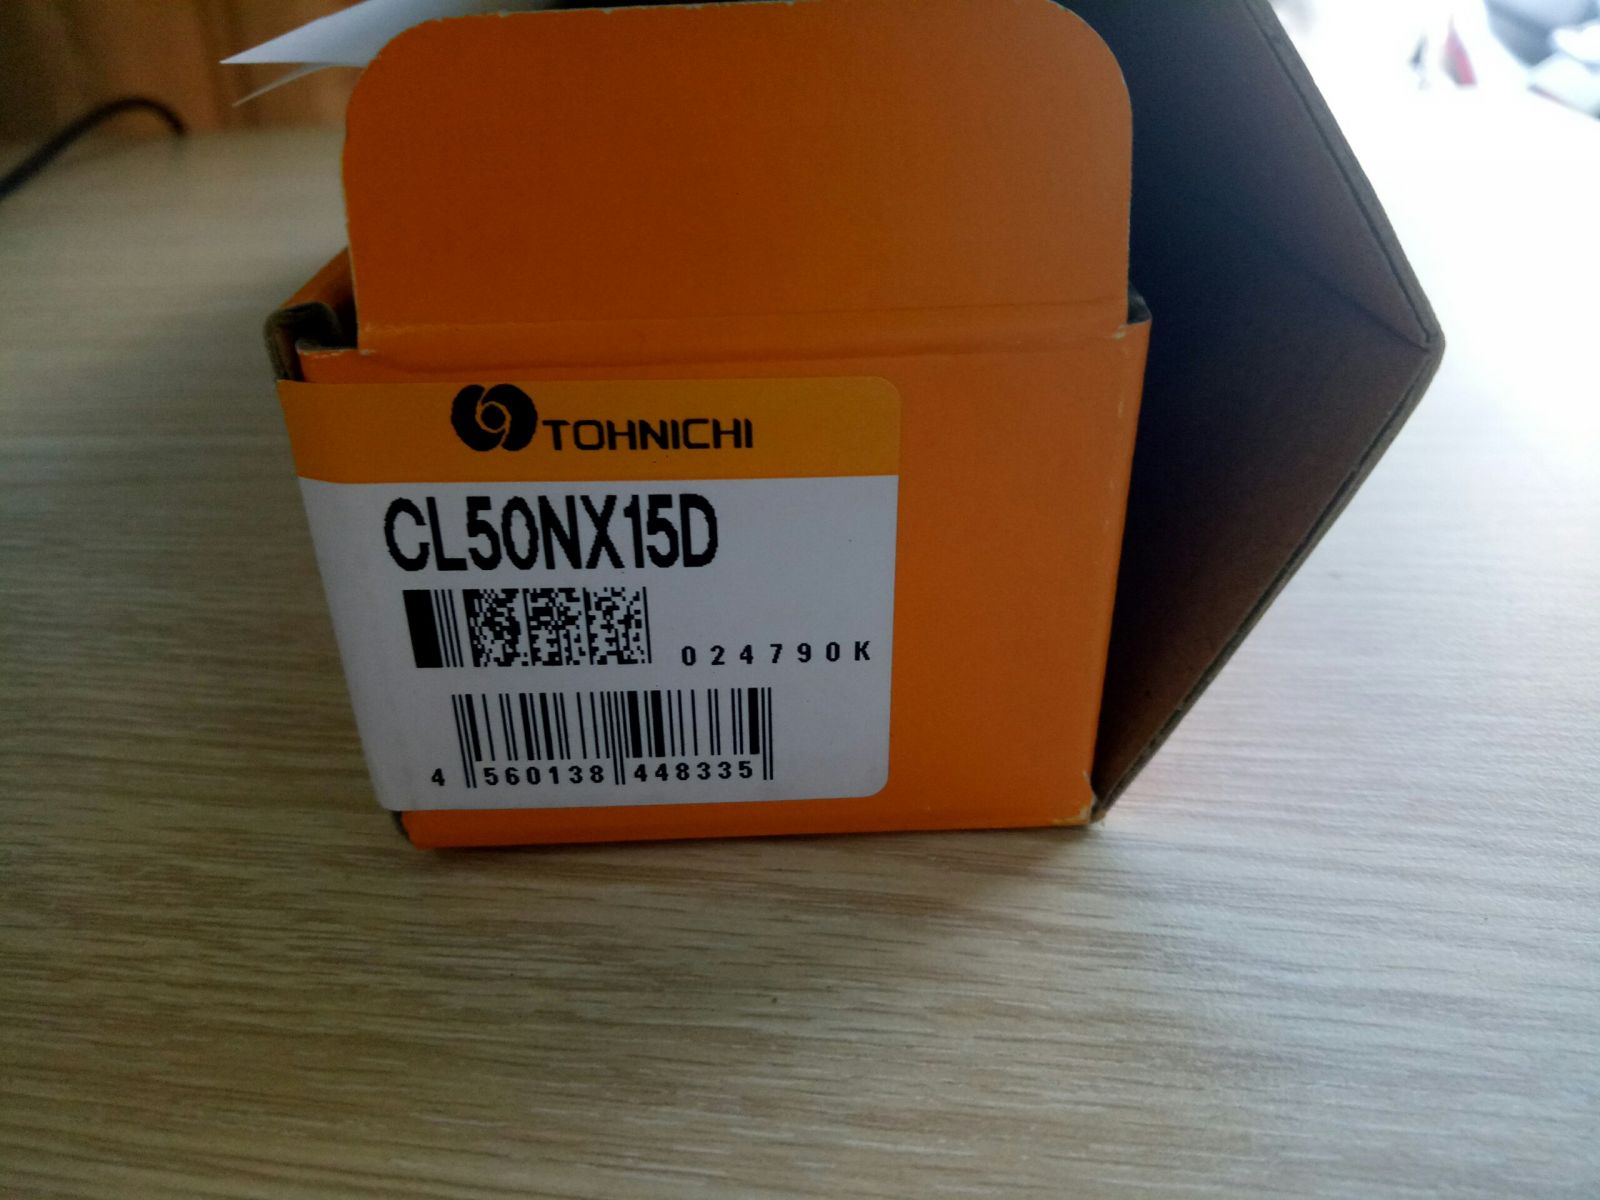 Cần xiết lực Tohnichi | Model CL50N*15D | Torque Wrench